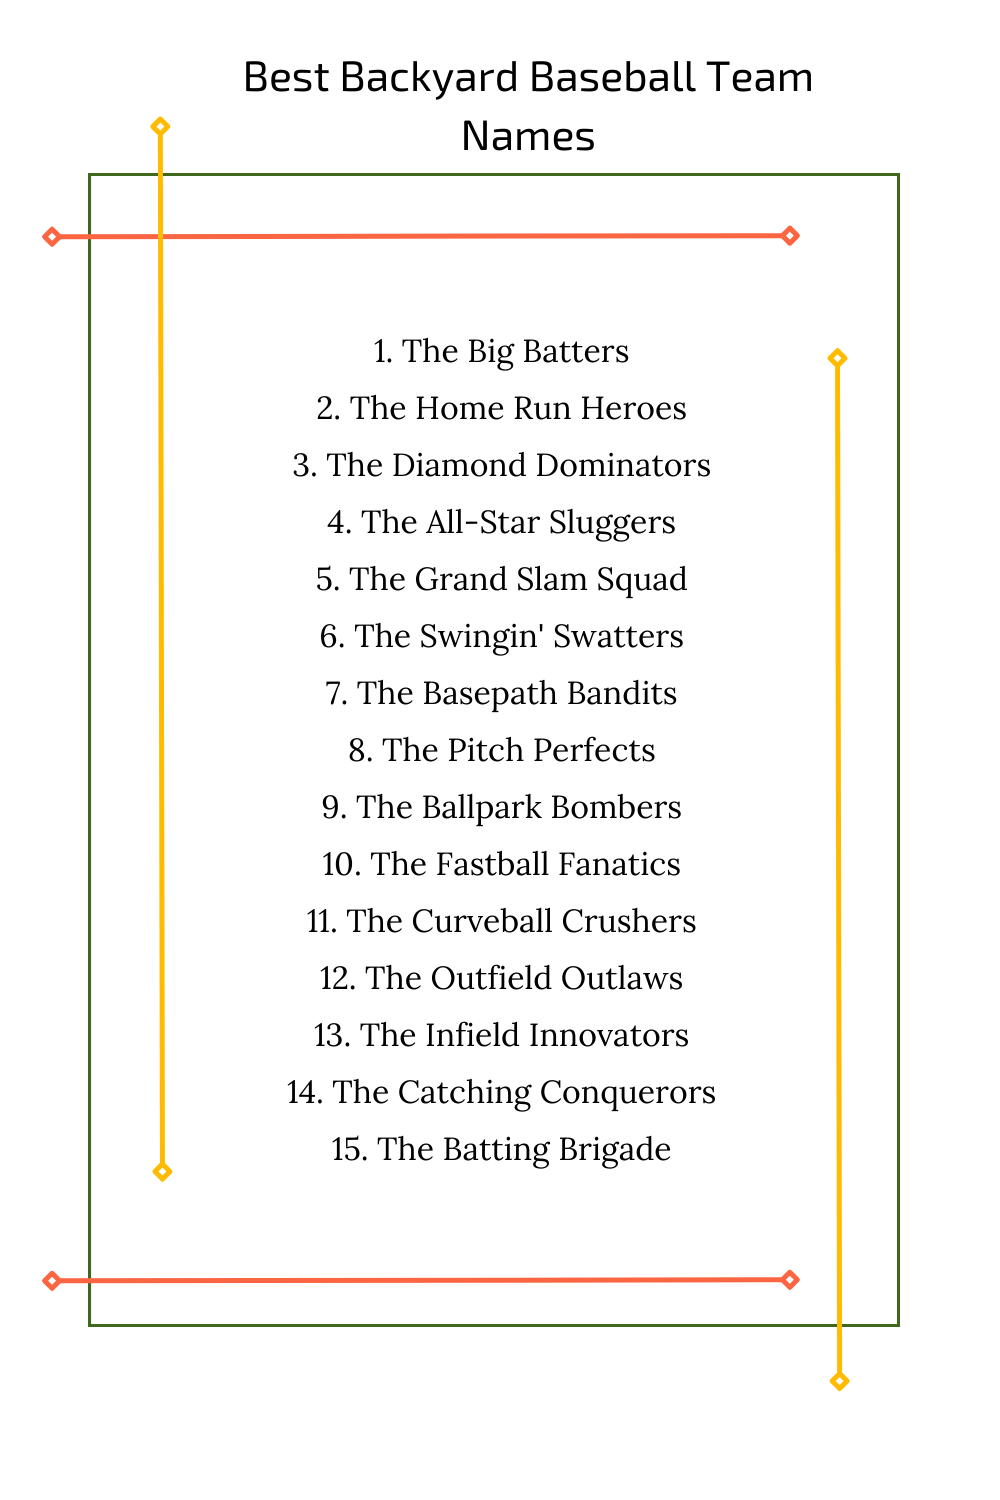 Best Backyard Baseball Team Names